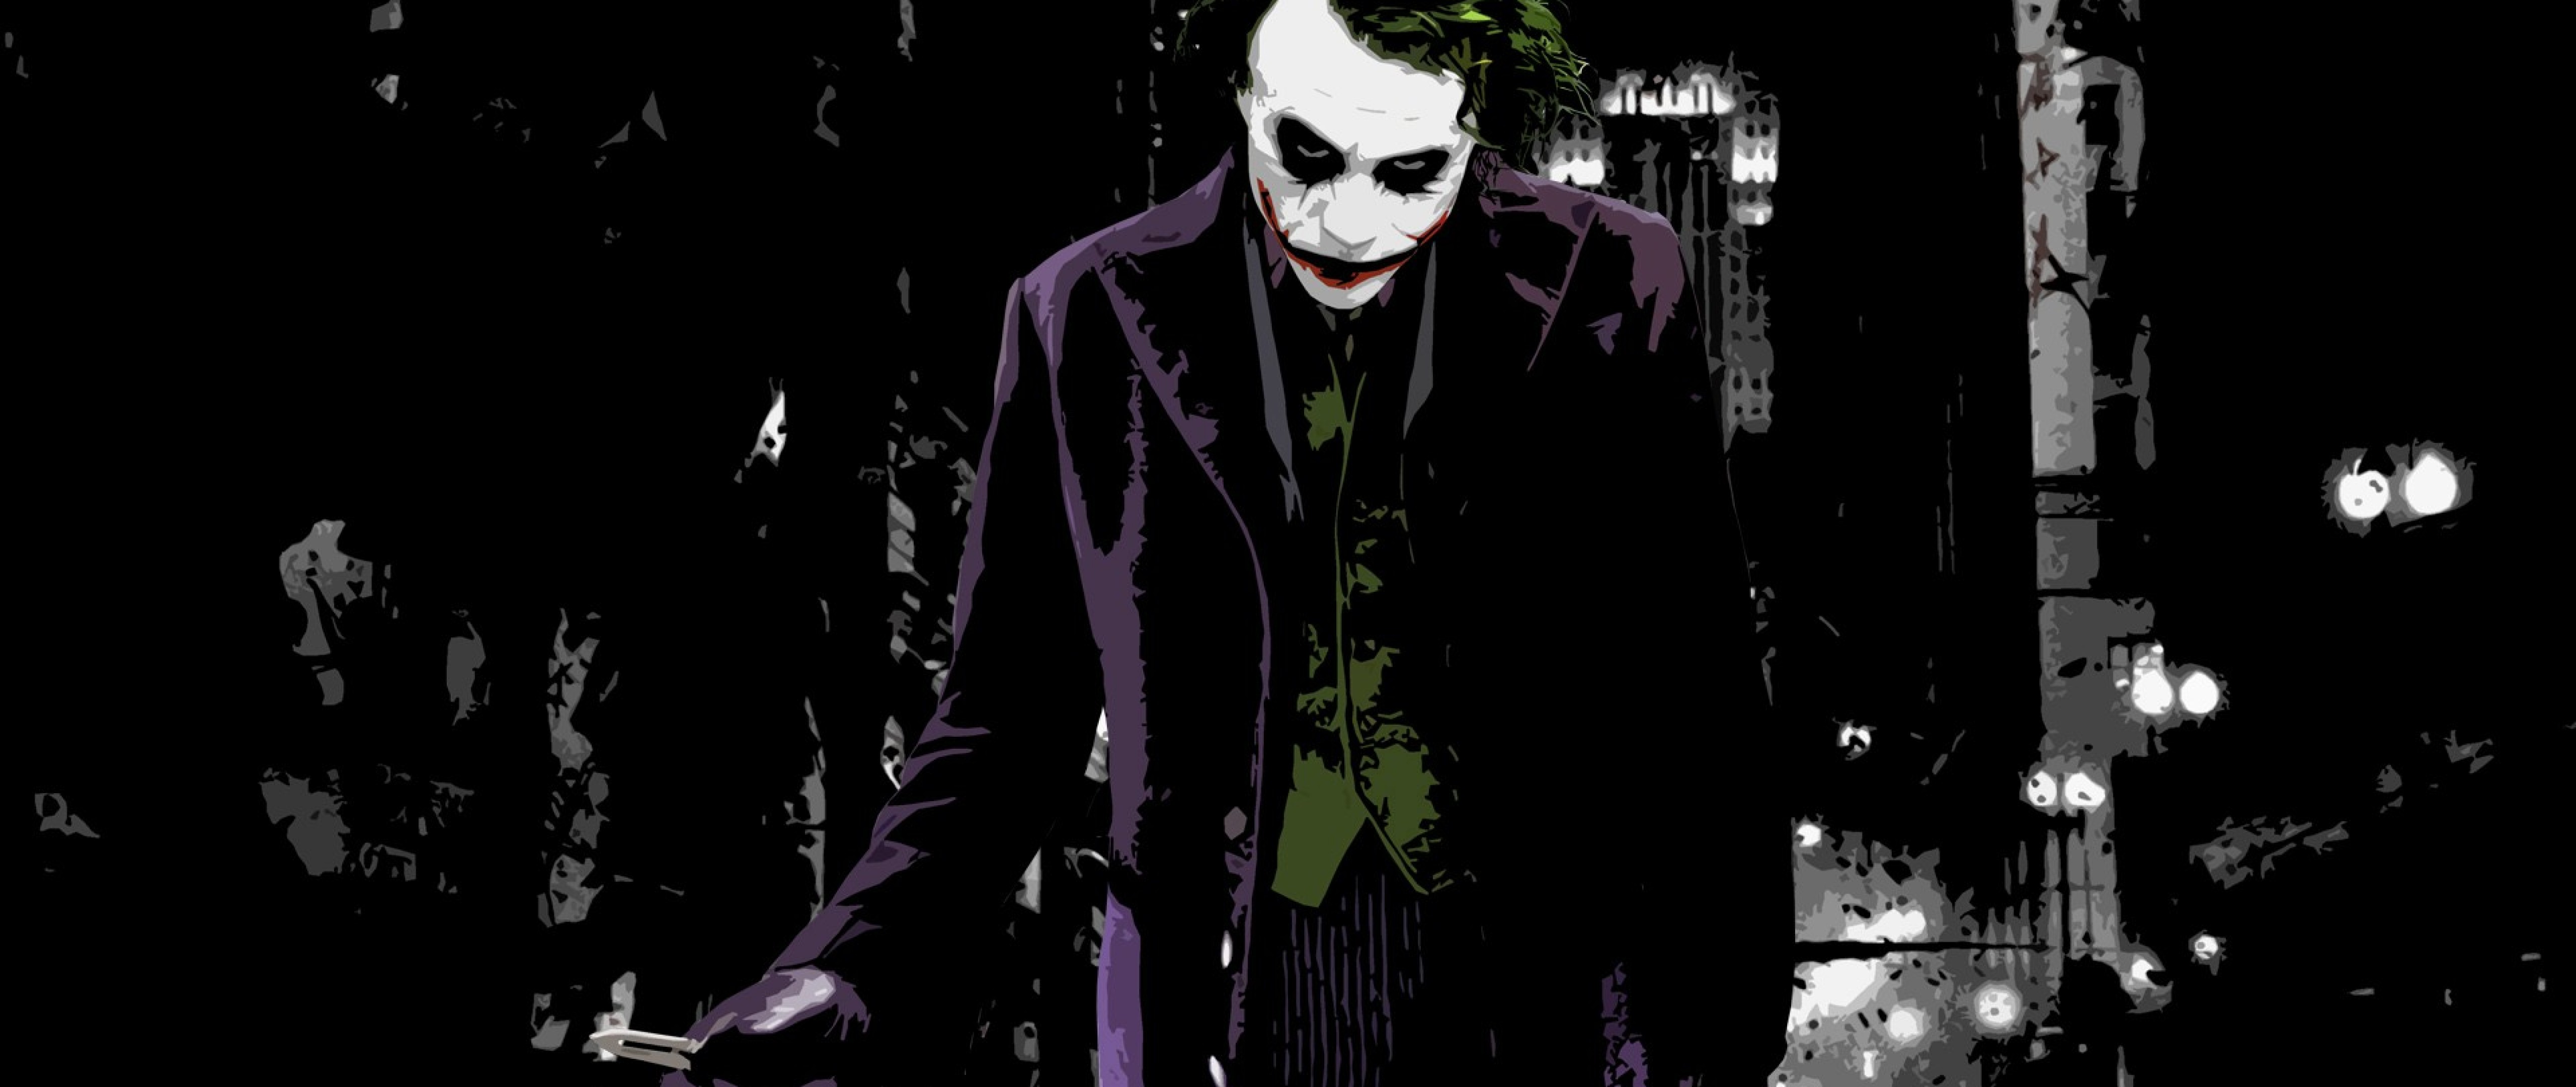 Full Joker Cartoon Hd Wallpaper for Desktop and Mobiles 4K Ultra HD Wide TV  - HD Wallpaper 